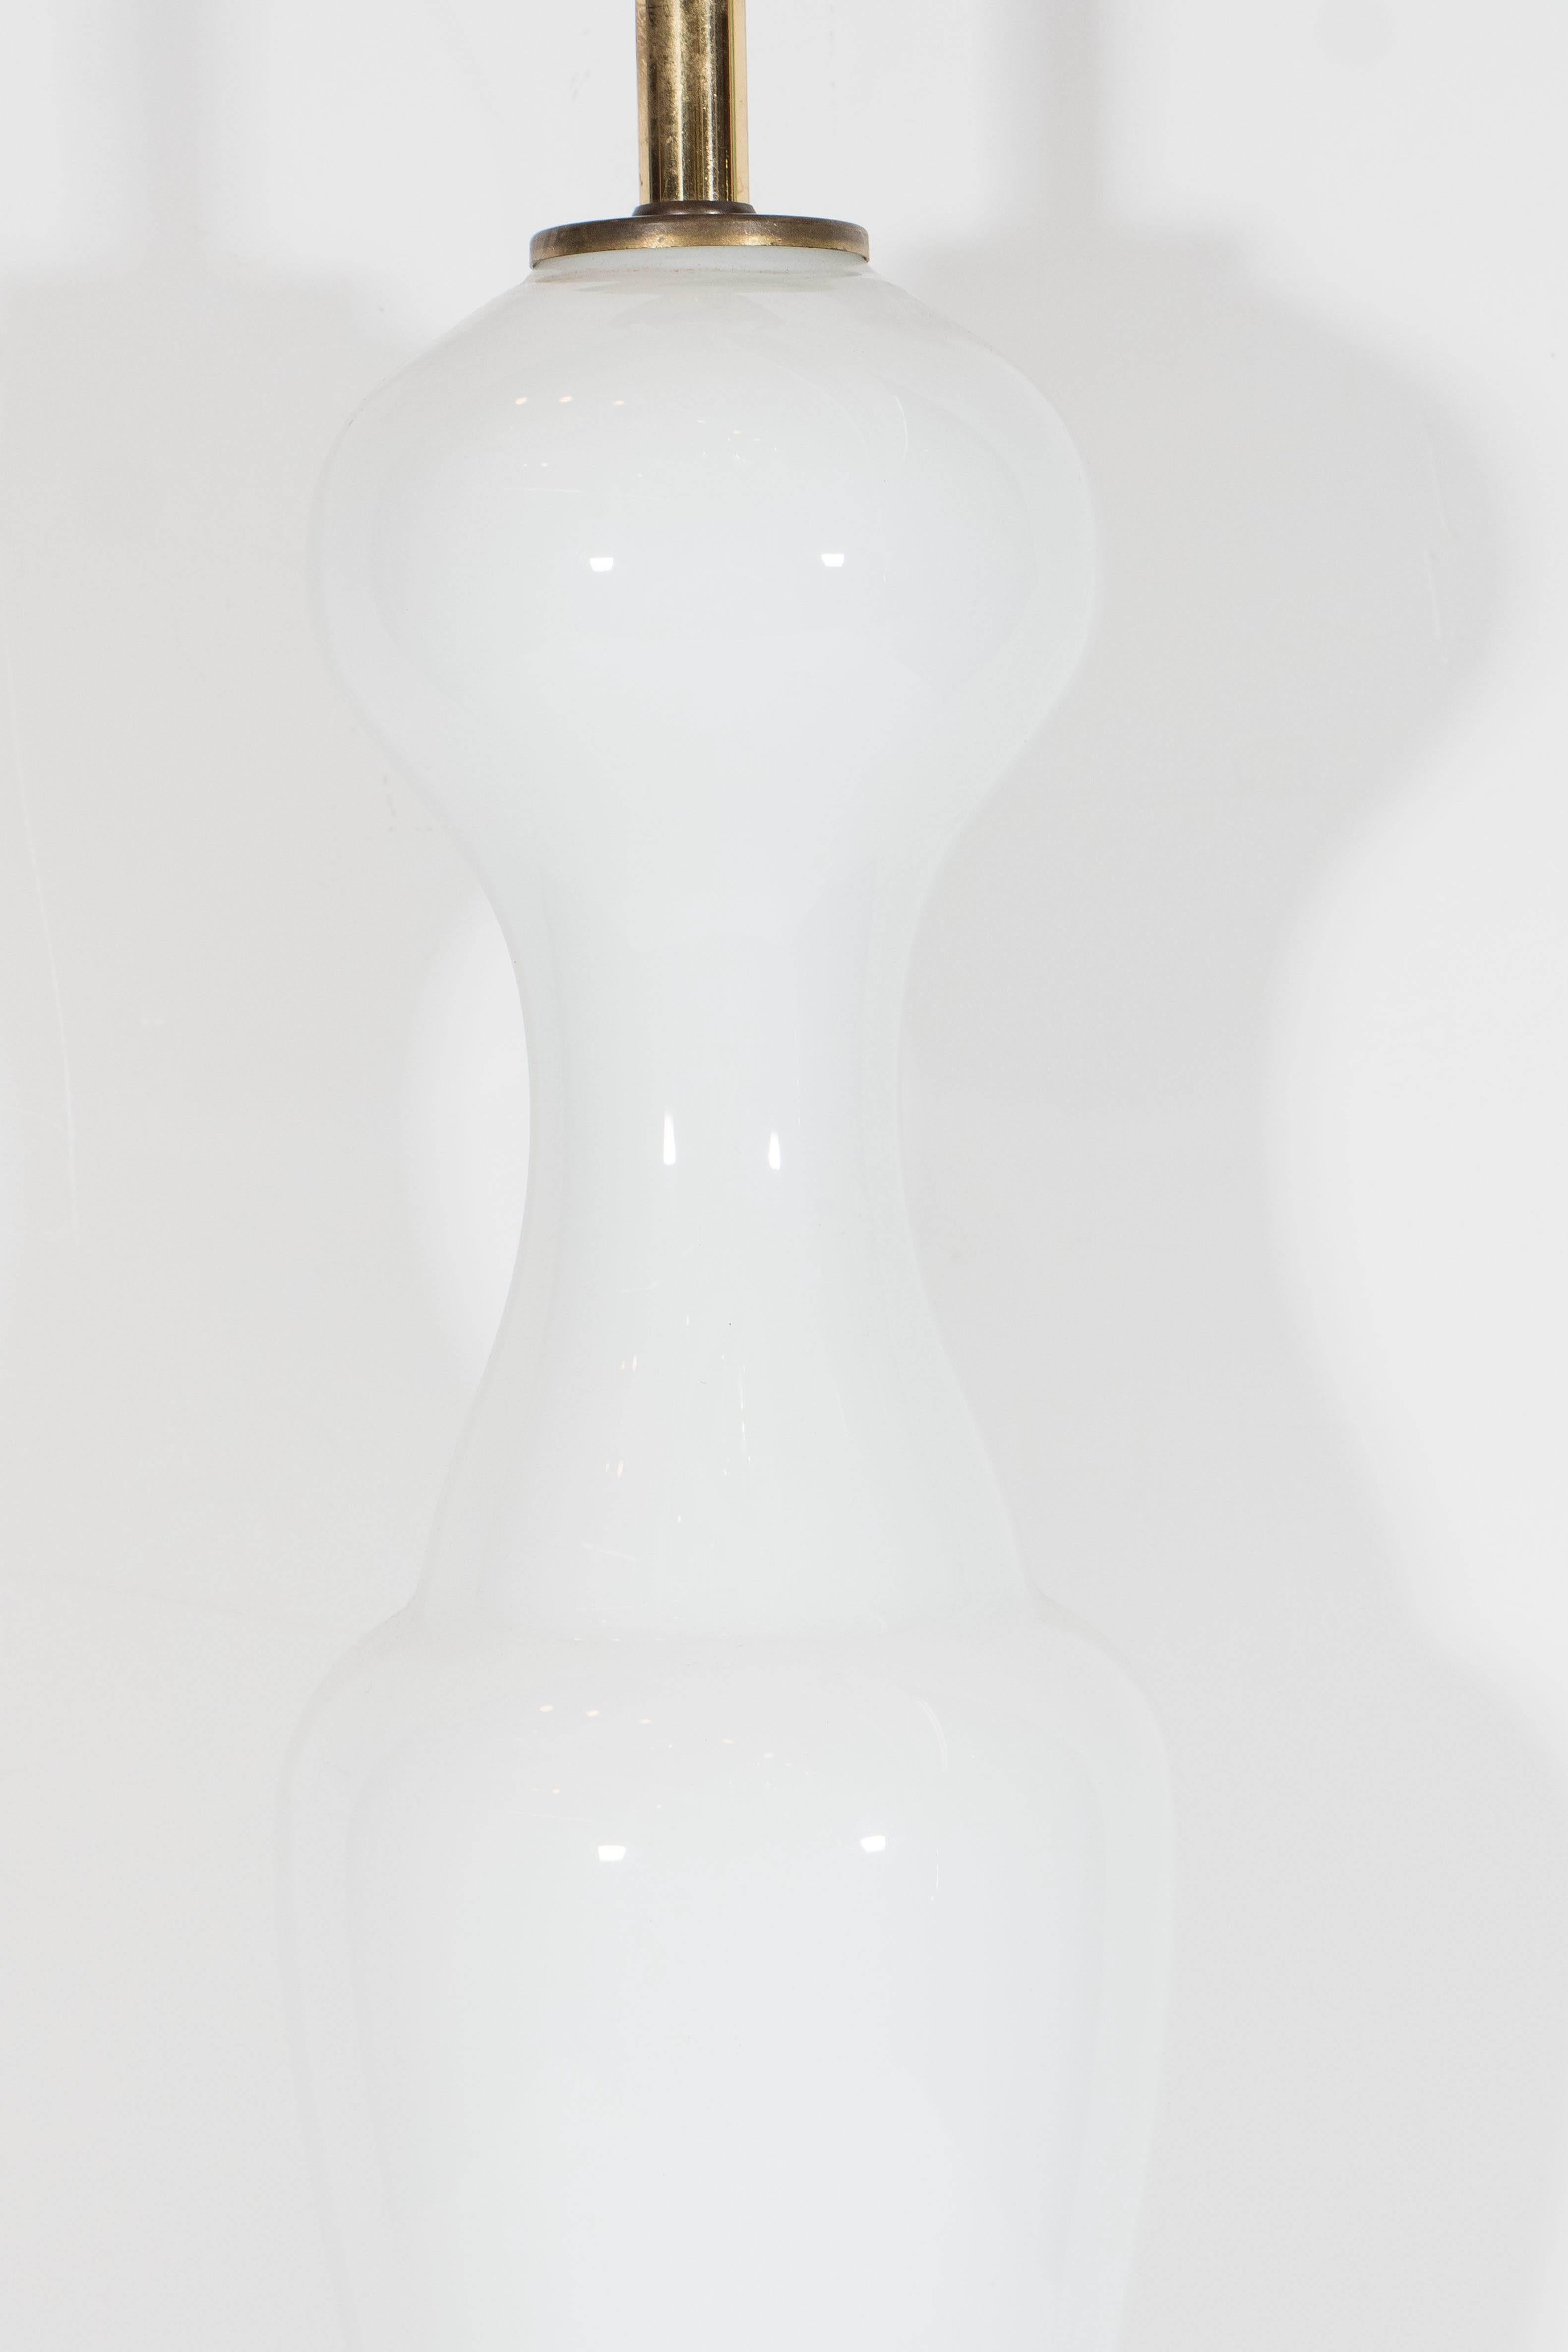 Mid-Century Modern Pair of Elegant Mid-Century White Opaline Glass Lamps on Gilt Bases